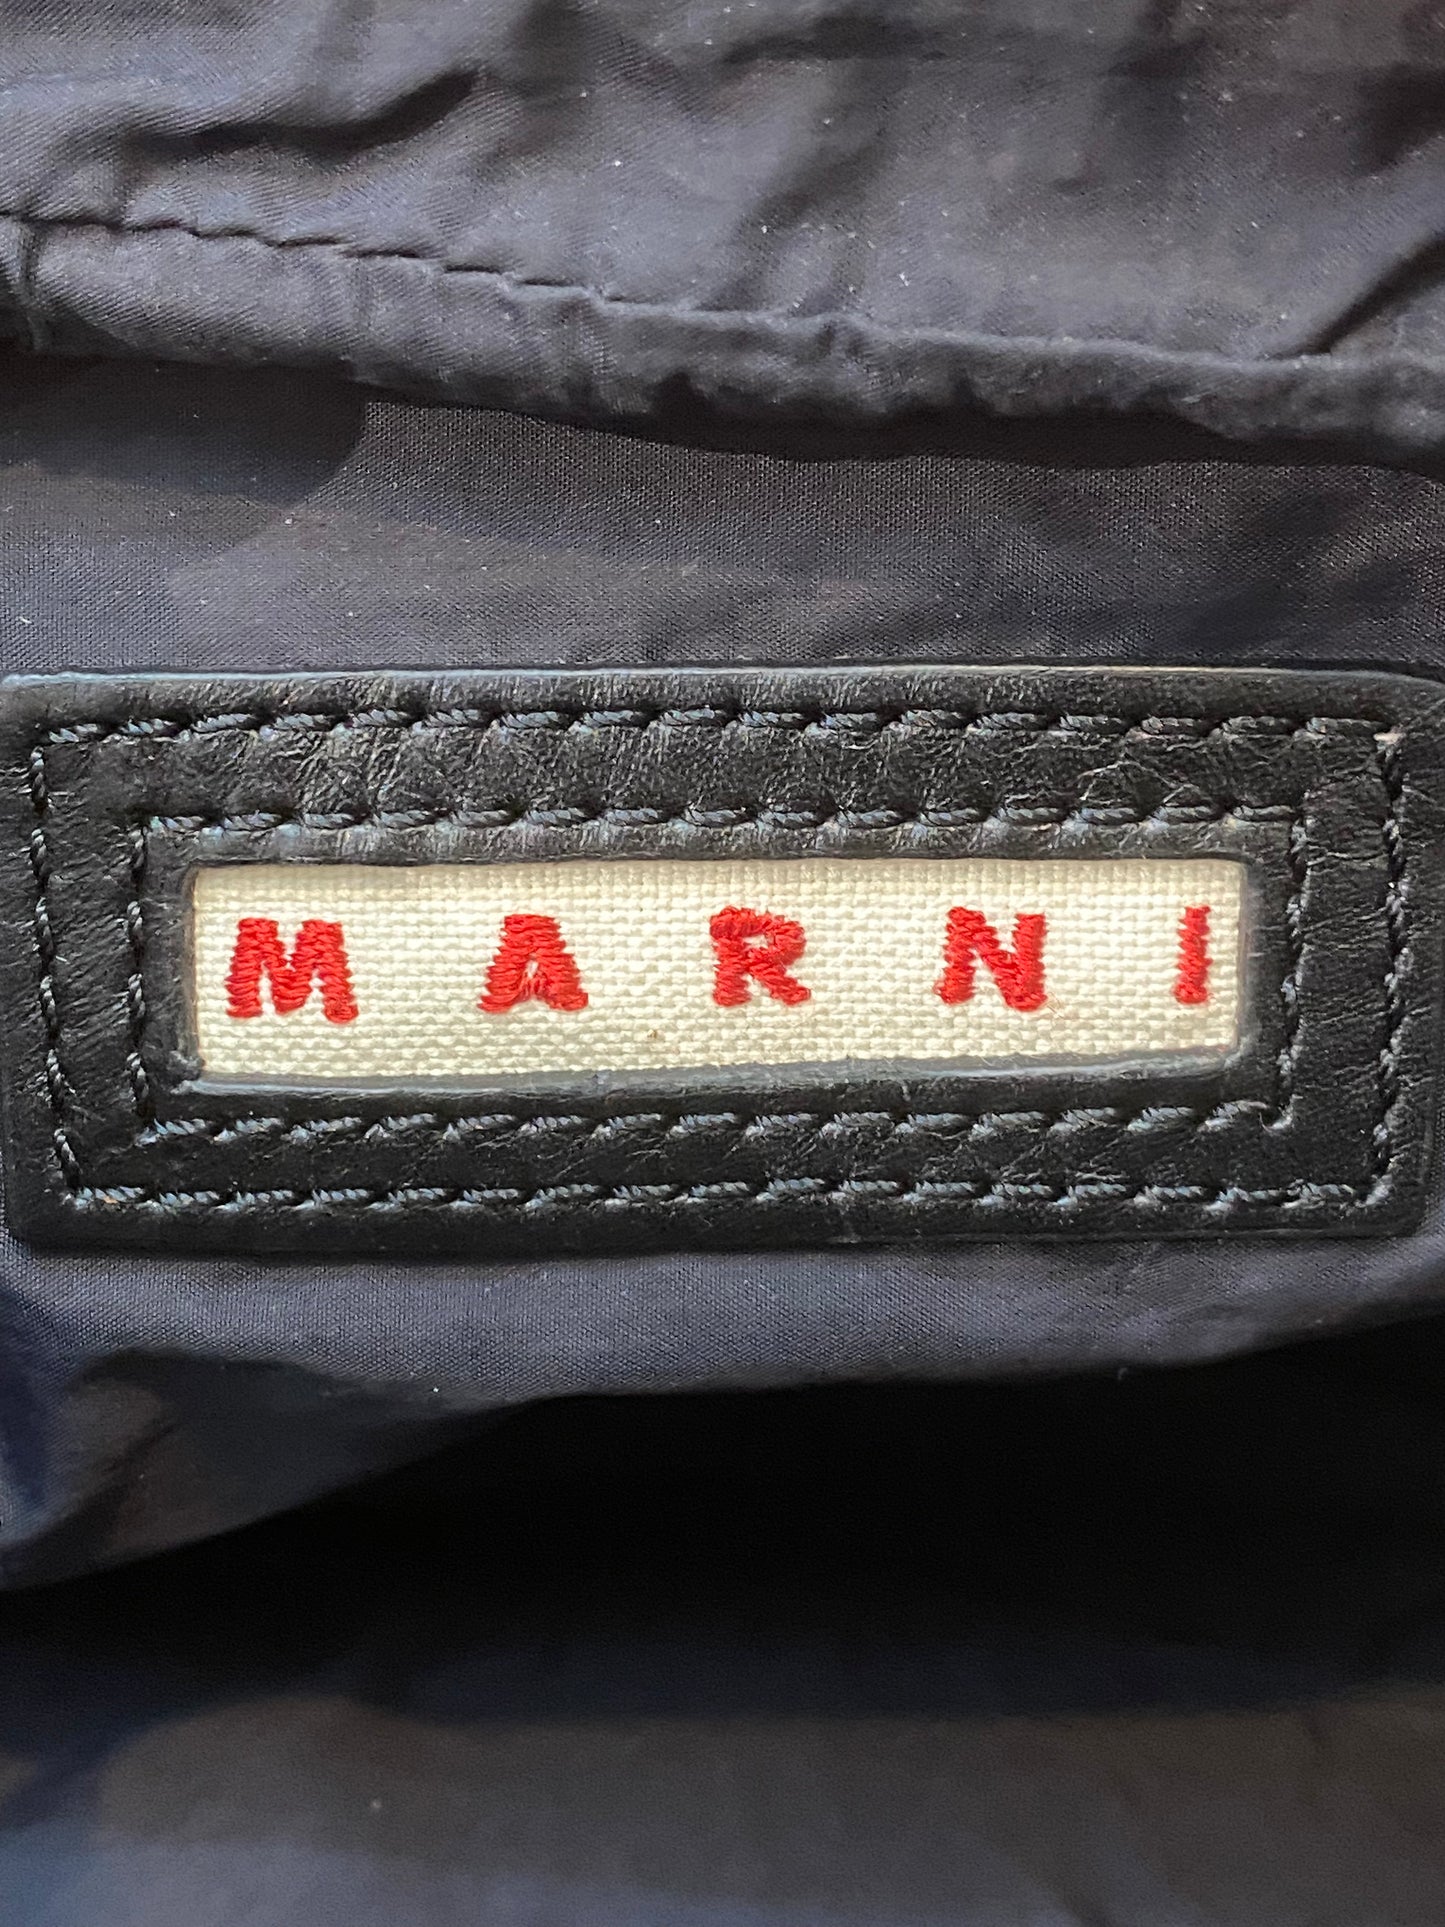 Marni black canvas pouch bag w leather handle & beaded keychain